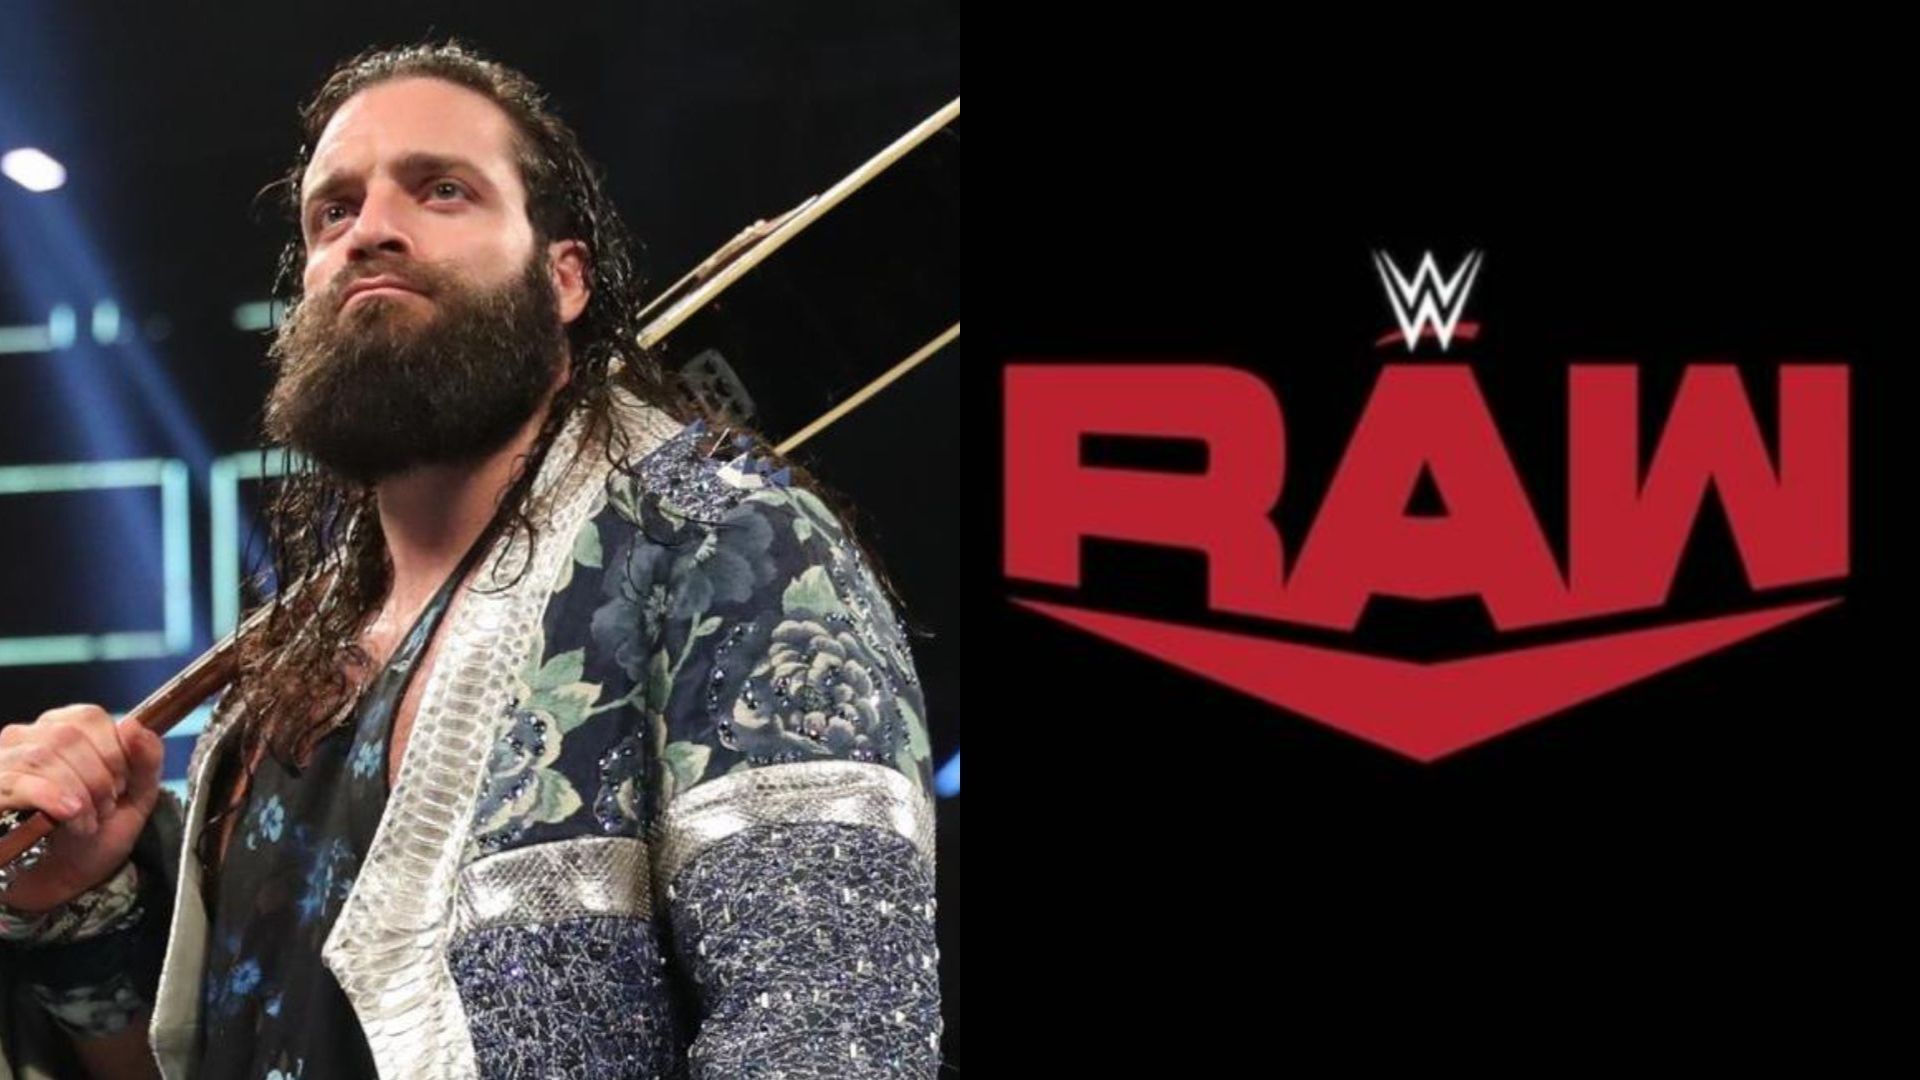 Elias made his return tonight during WWE RAW